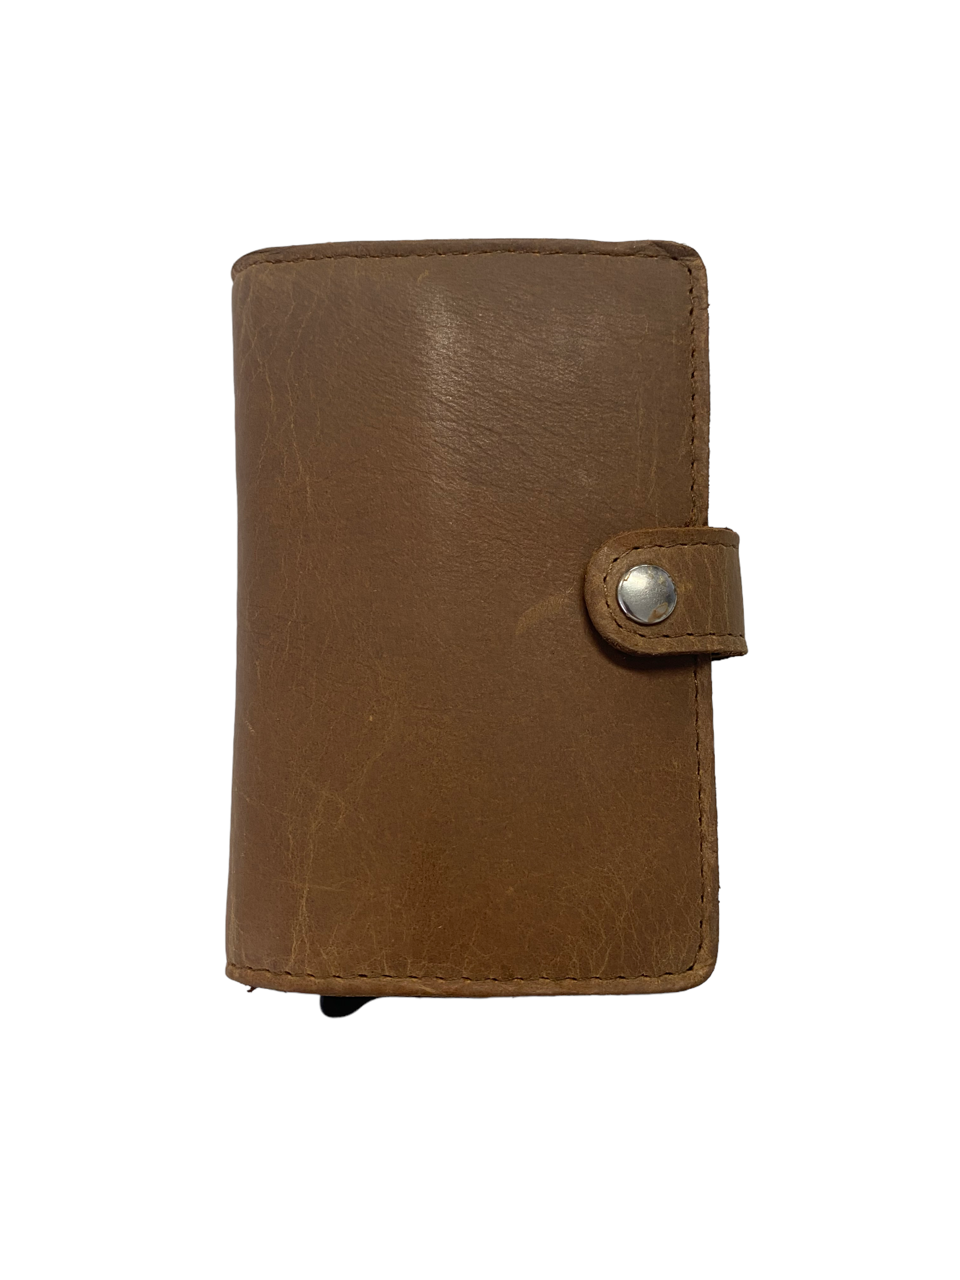 Oran - DL-02 Leather Spring load 8 card wallet - Brown